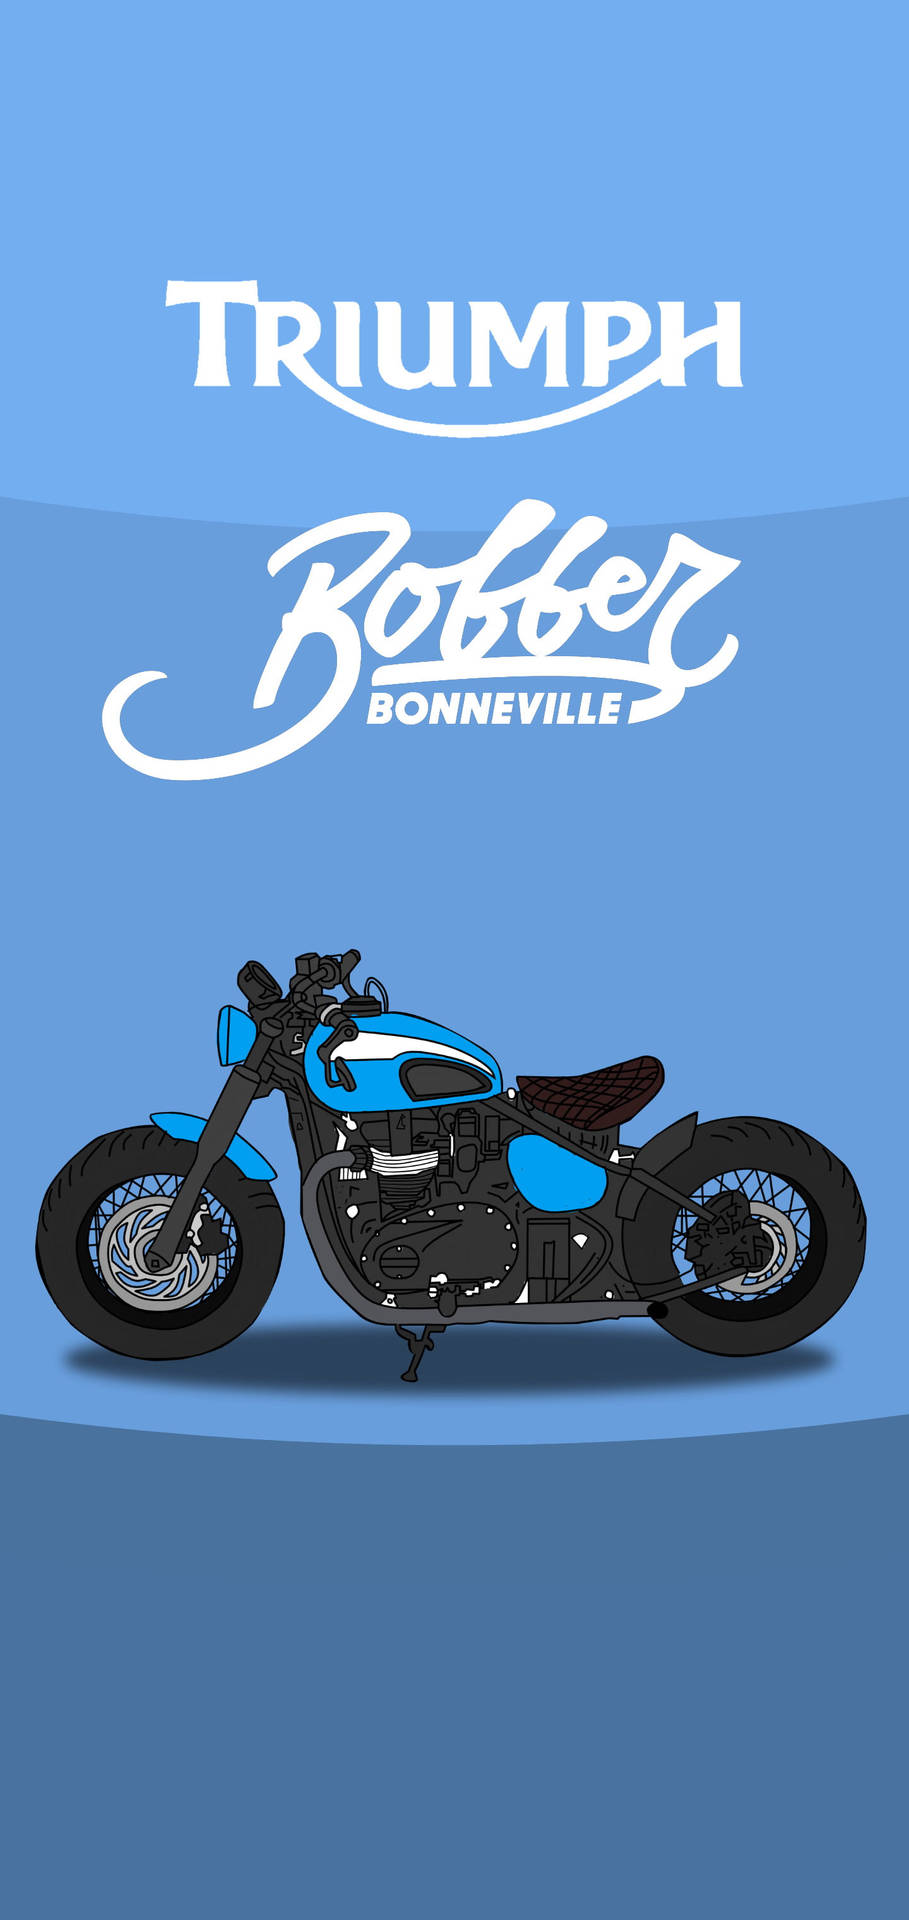 Majestic Triumph Bonneville Bobber Motorcycle Wallpaper